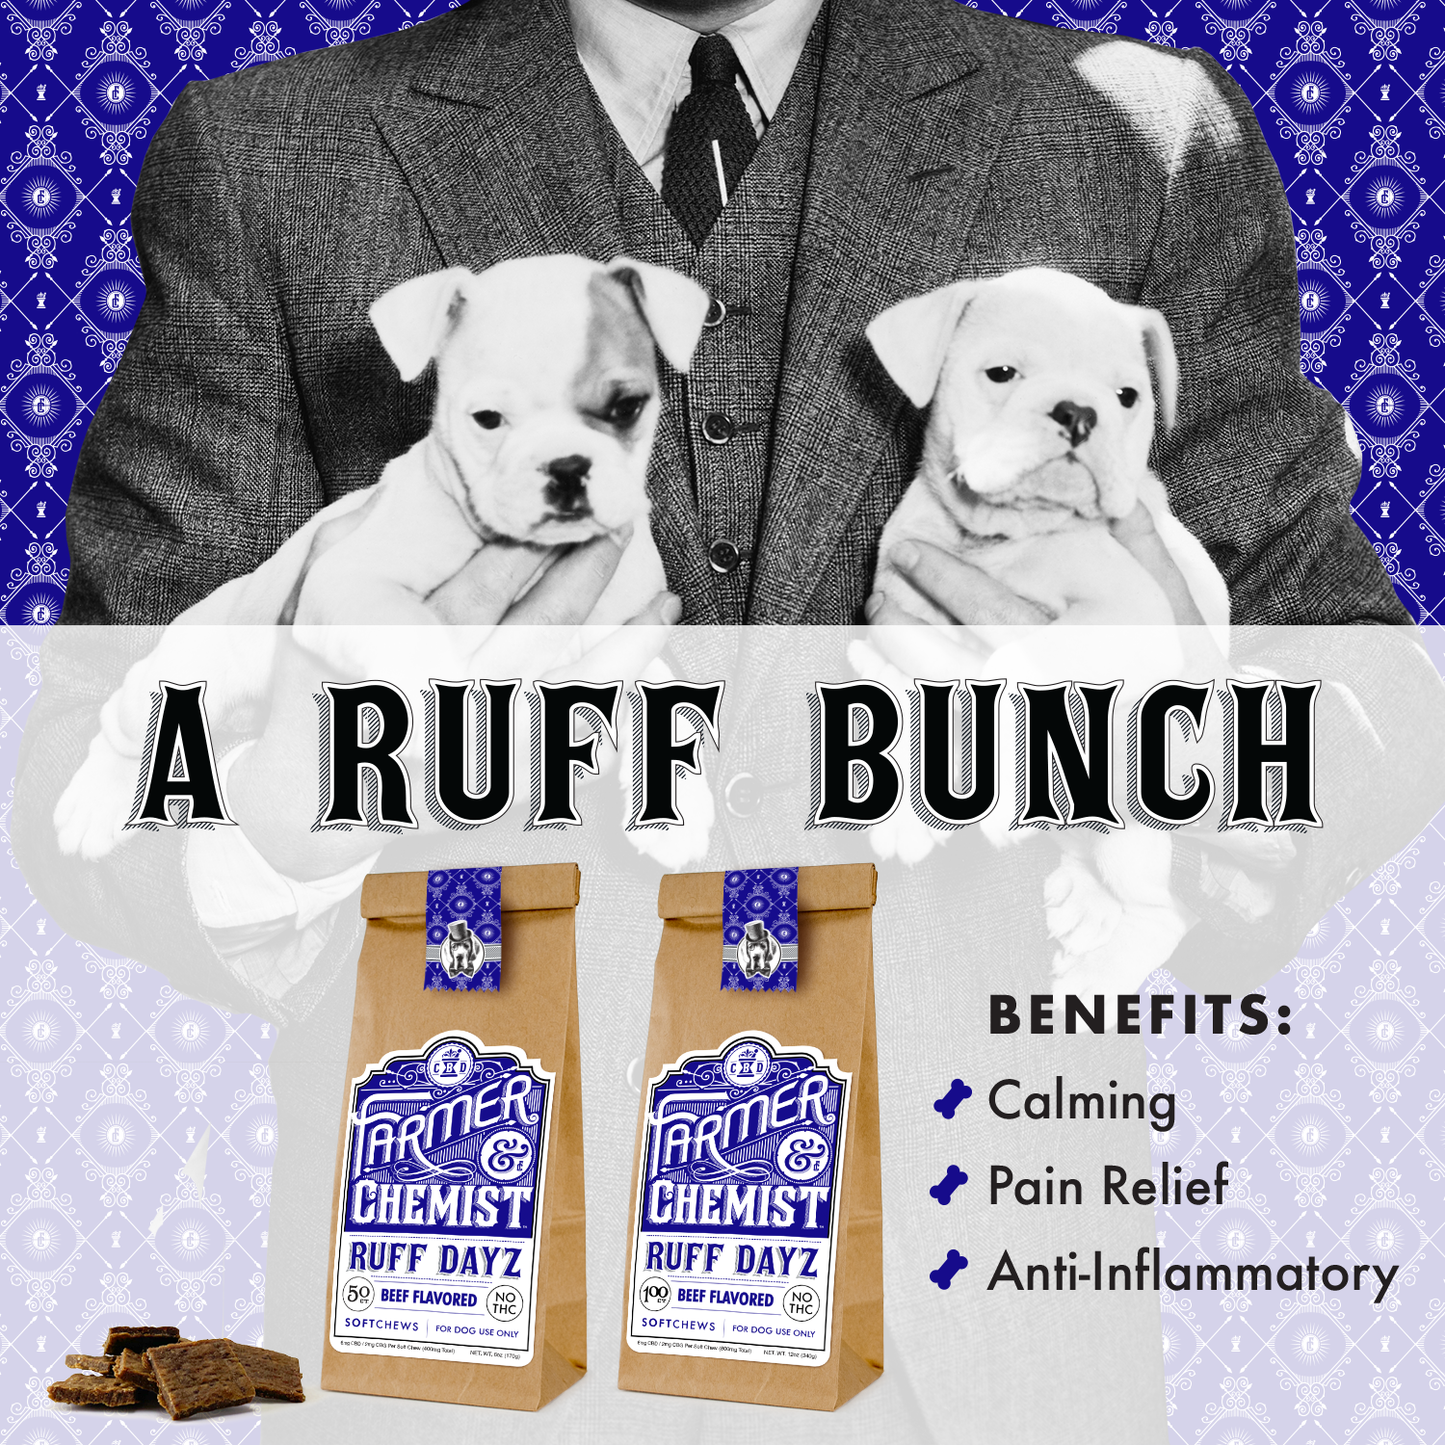 RUFF DAYZ - 50ct Beef Flavored Dog Soft Chews